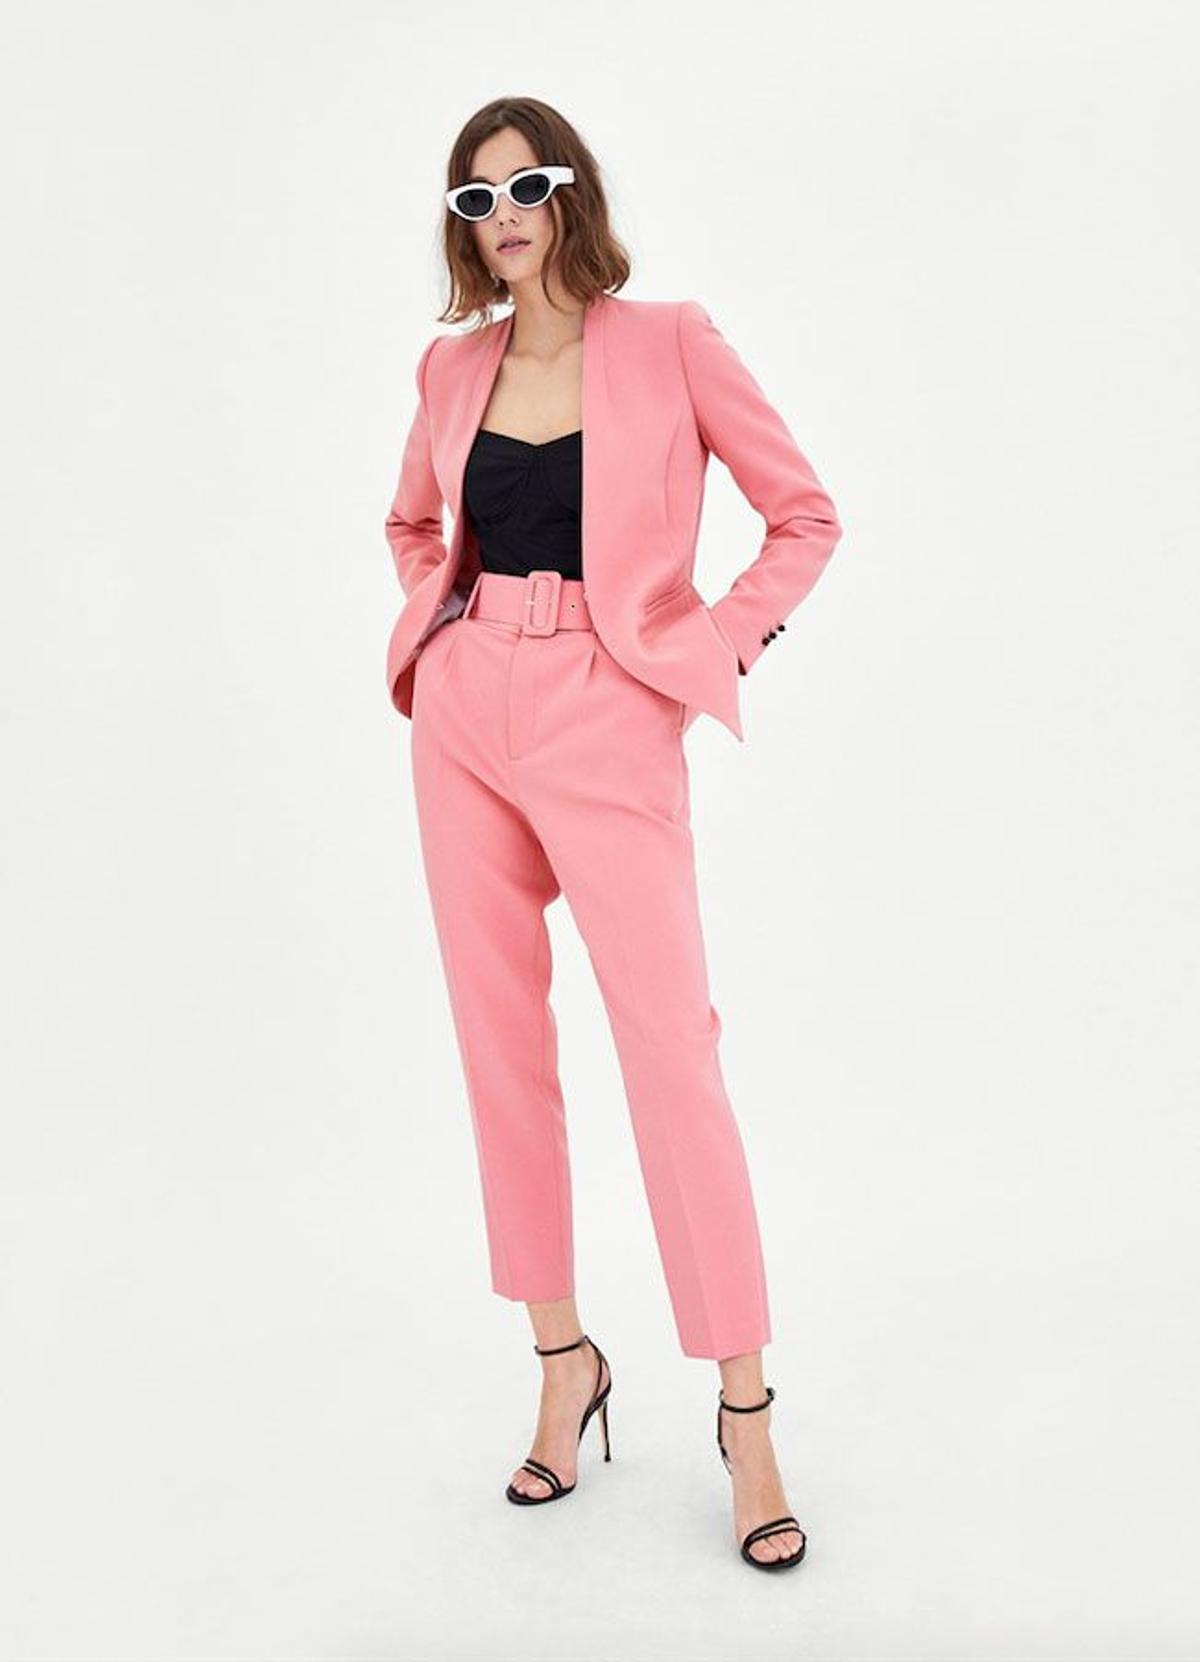 Trajes de chaqueta rosas: de Zara